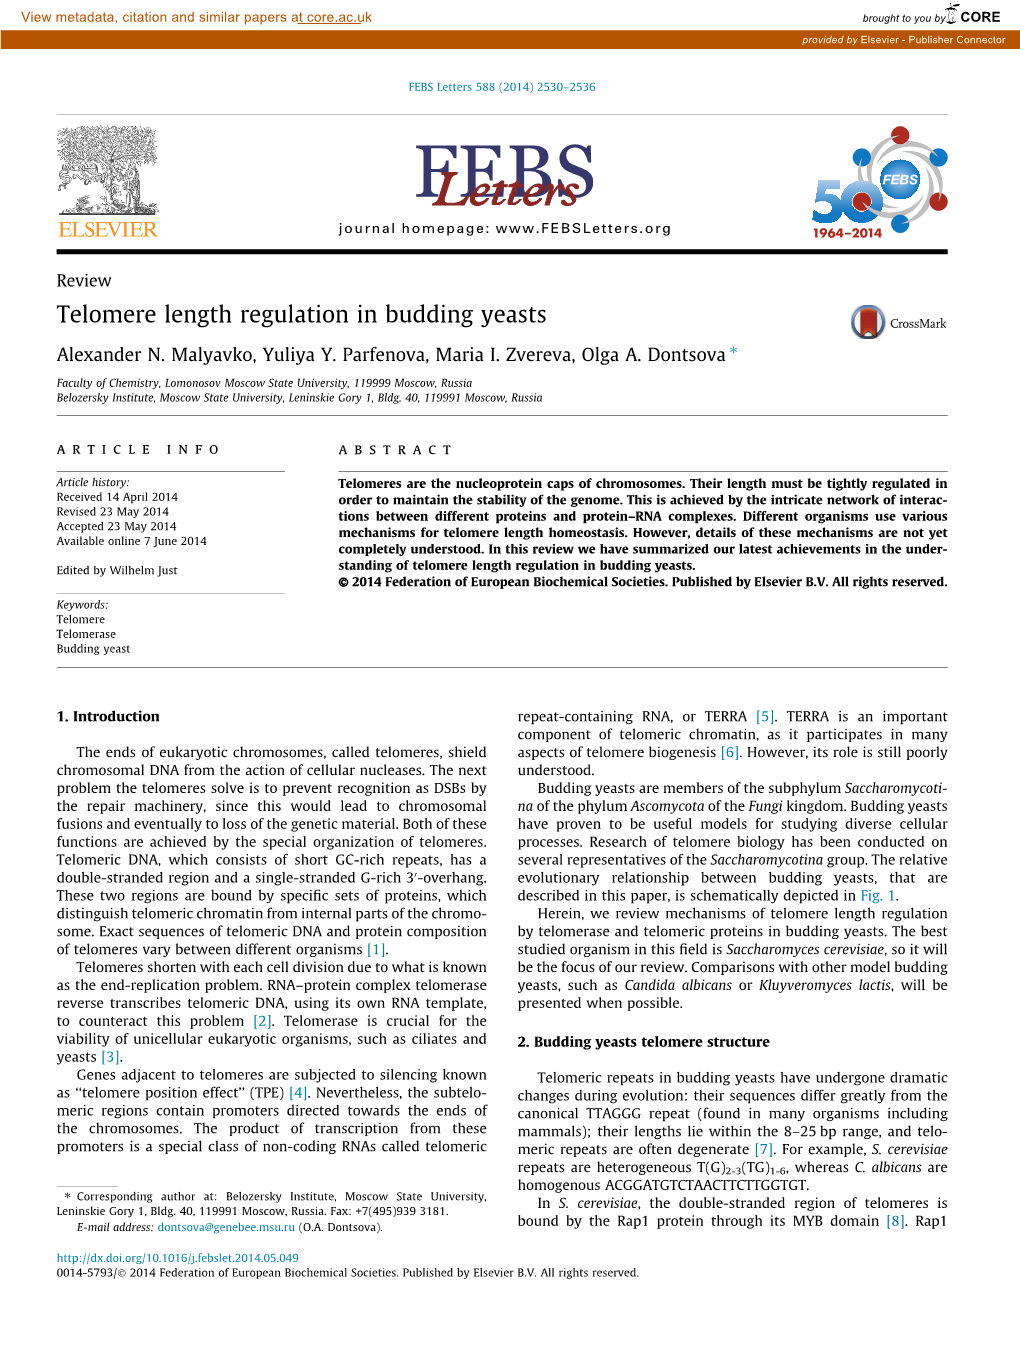 Telomere Length Regulation in Budding Yeasts ⇑ Alexander N